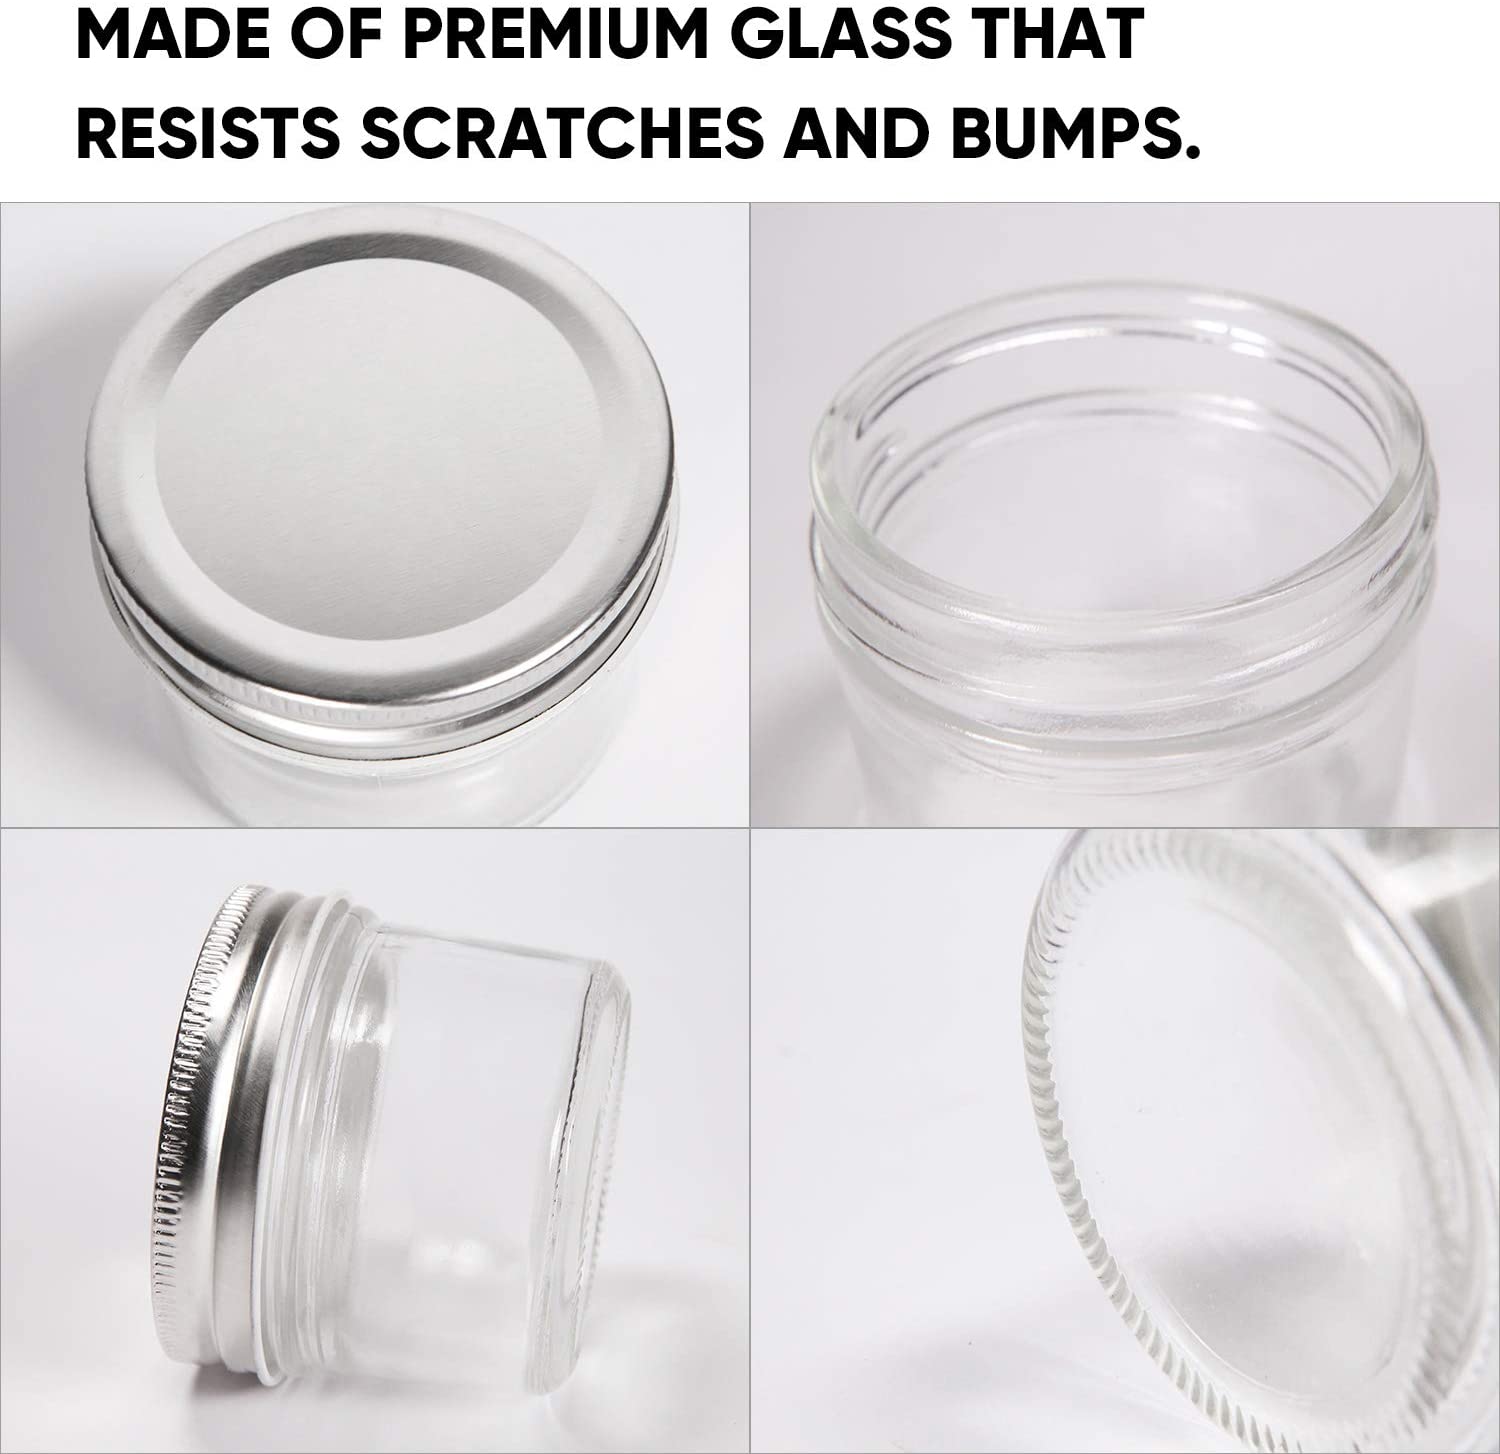 4oz Glass Jars With Silver Lids Mason Jars Ideal For Honey Jam Baby Foods Wedding Favor Mini Spice Jars